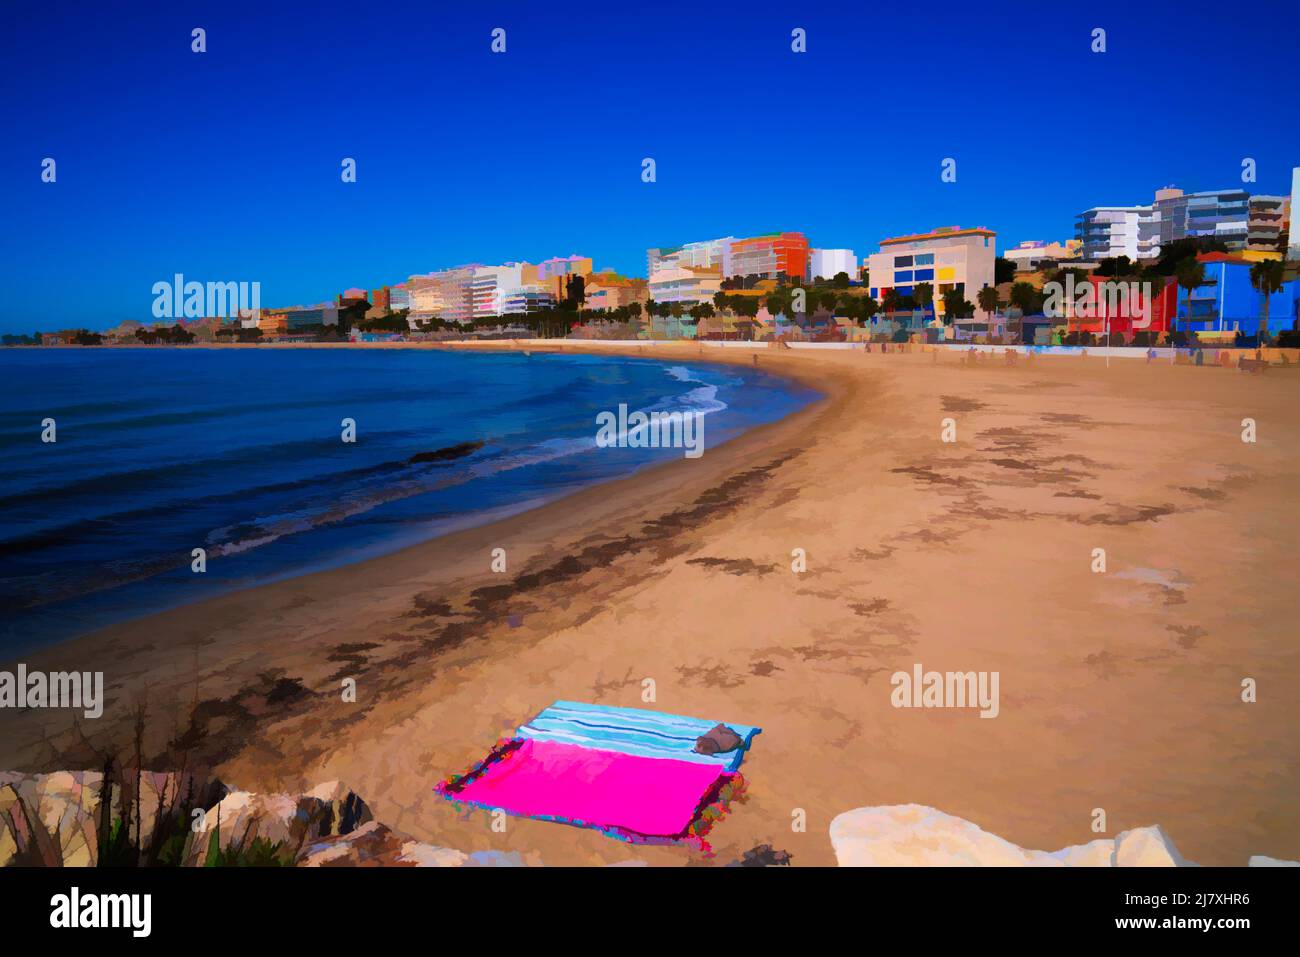 Villajoyosa Spain beach towel sand sea and palm trees illustration Costa Blanca Alicante Stock Photo